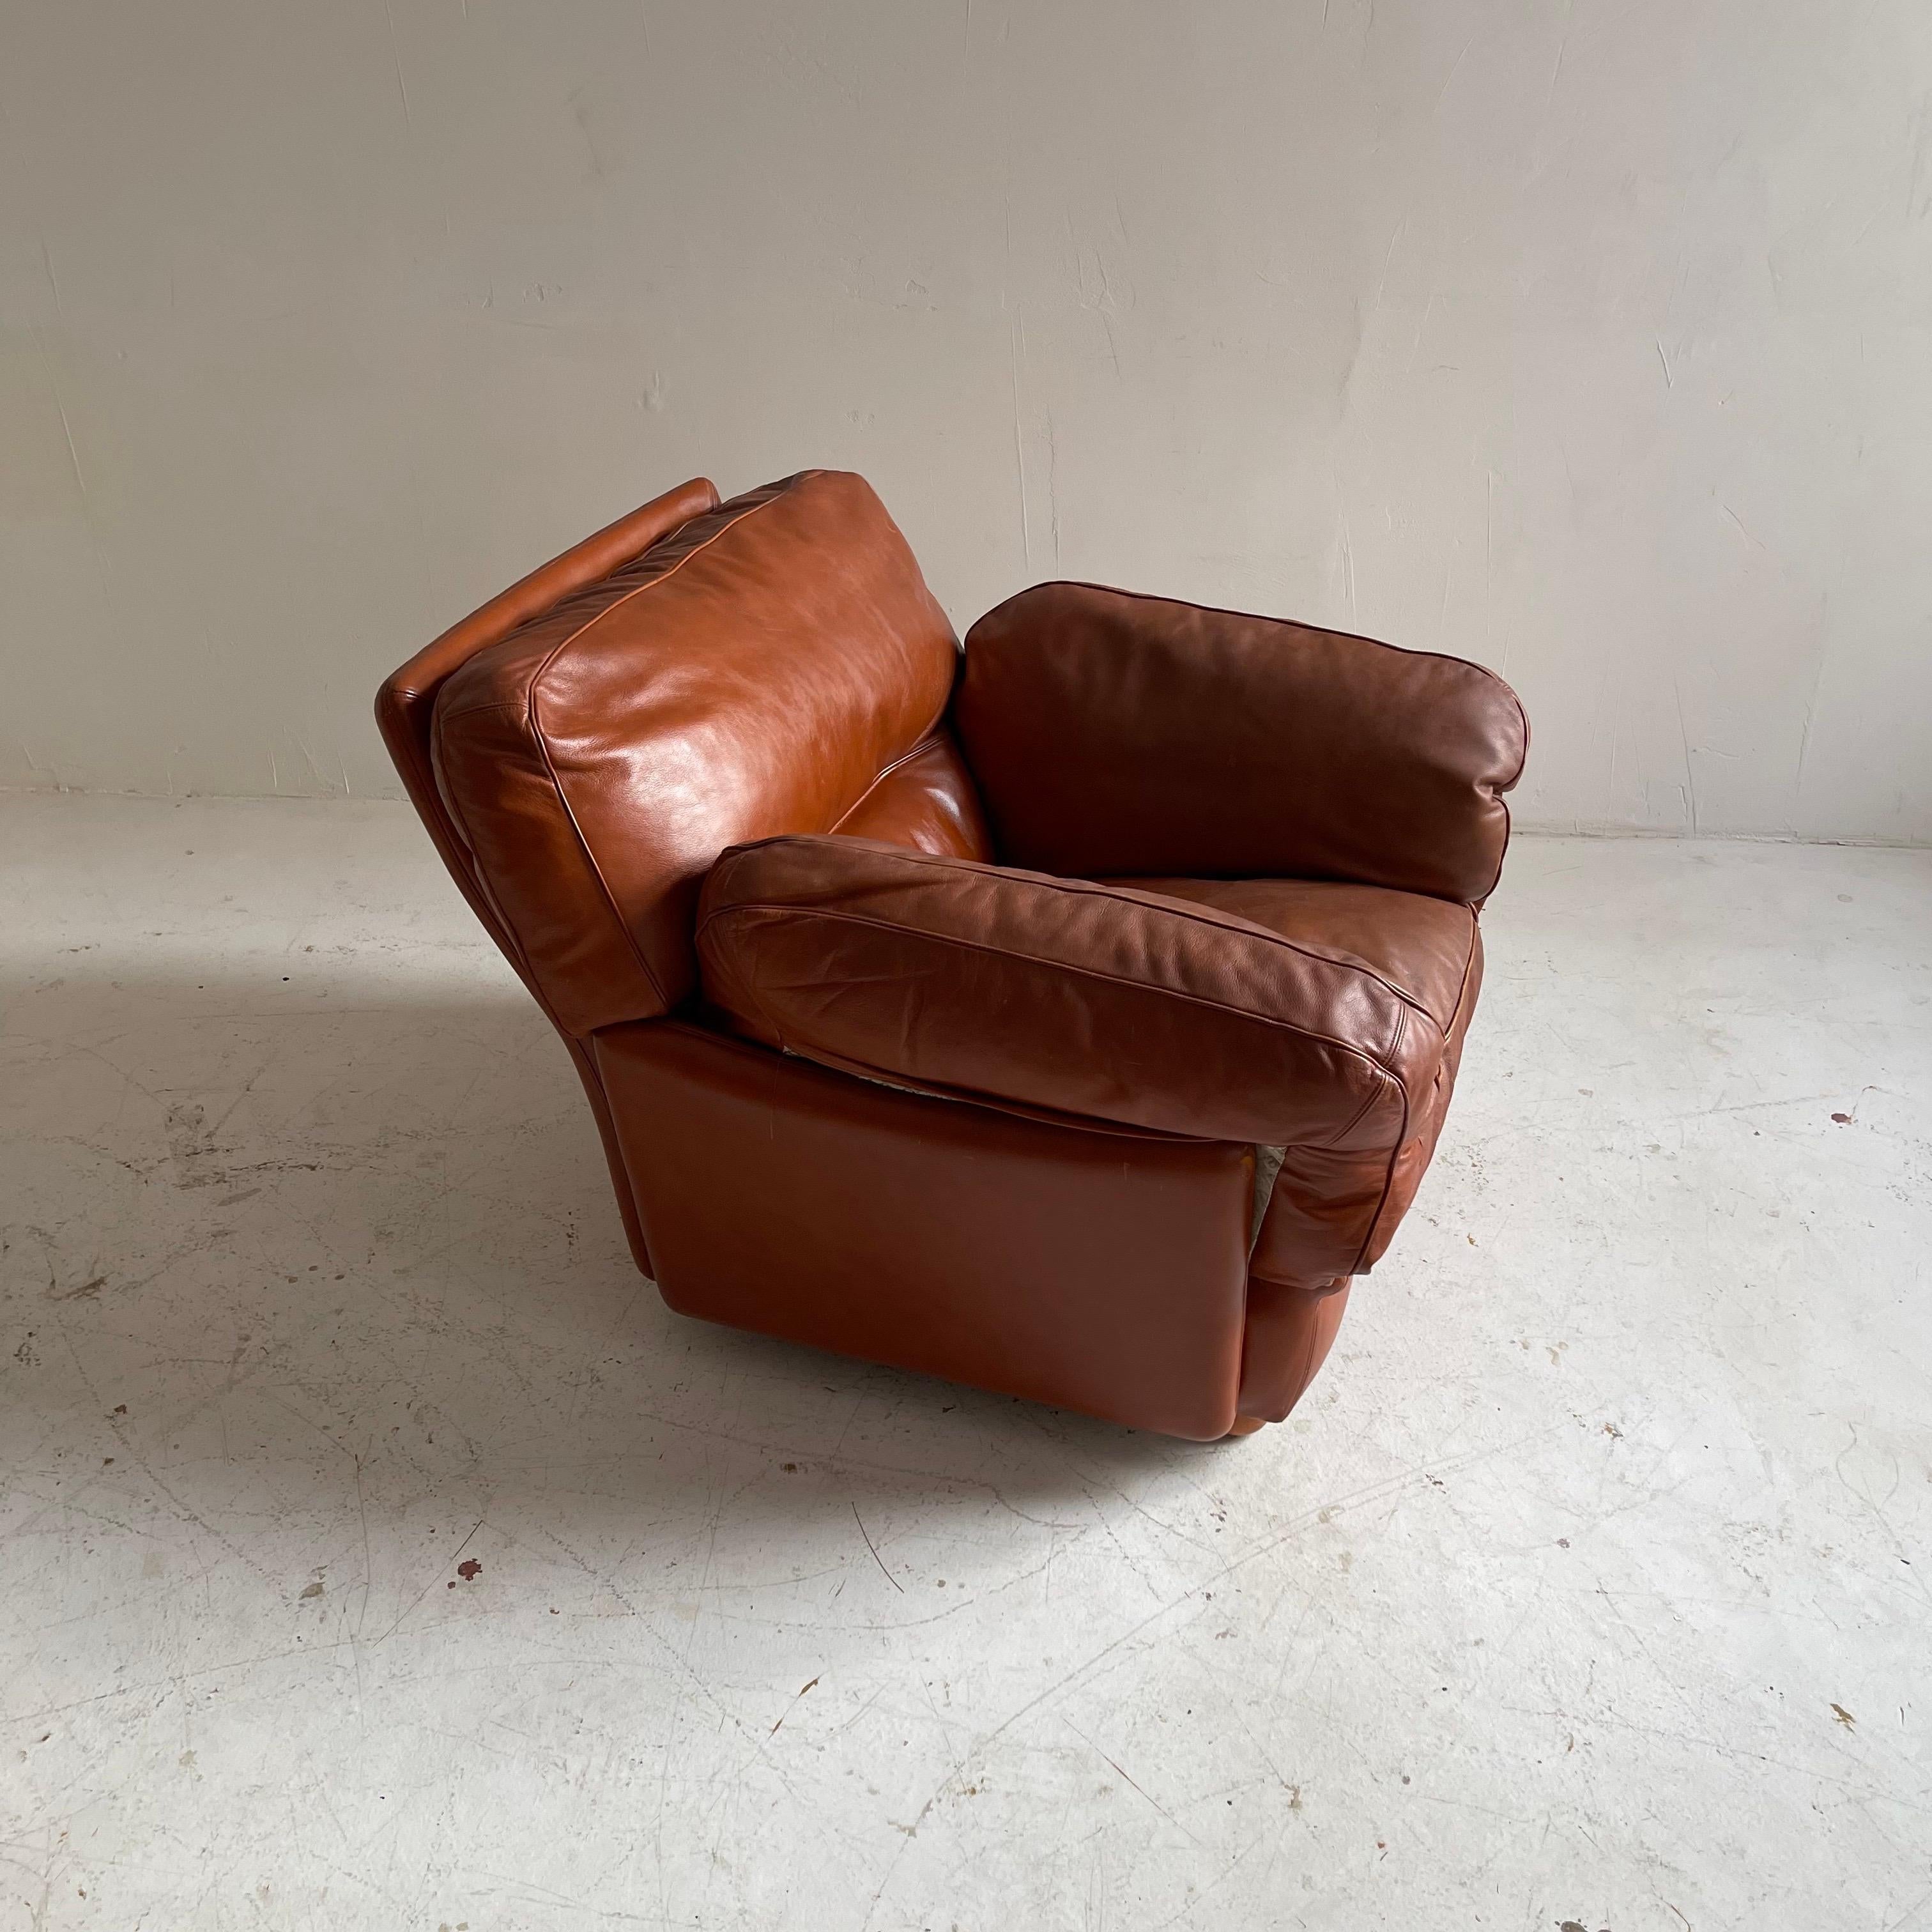 Tito Agnoli Cognac Leather Sofa Suite Model 'Poppy' Poltrona Frau, Italy 1970s For Sale 4